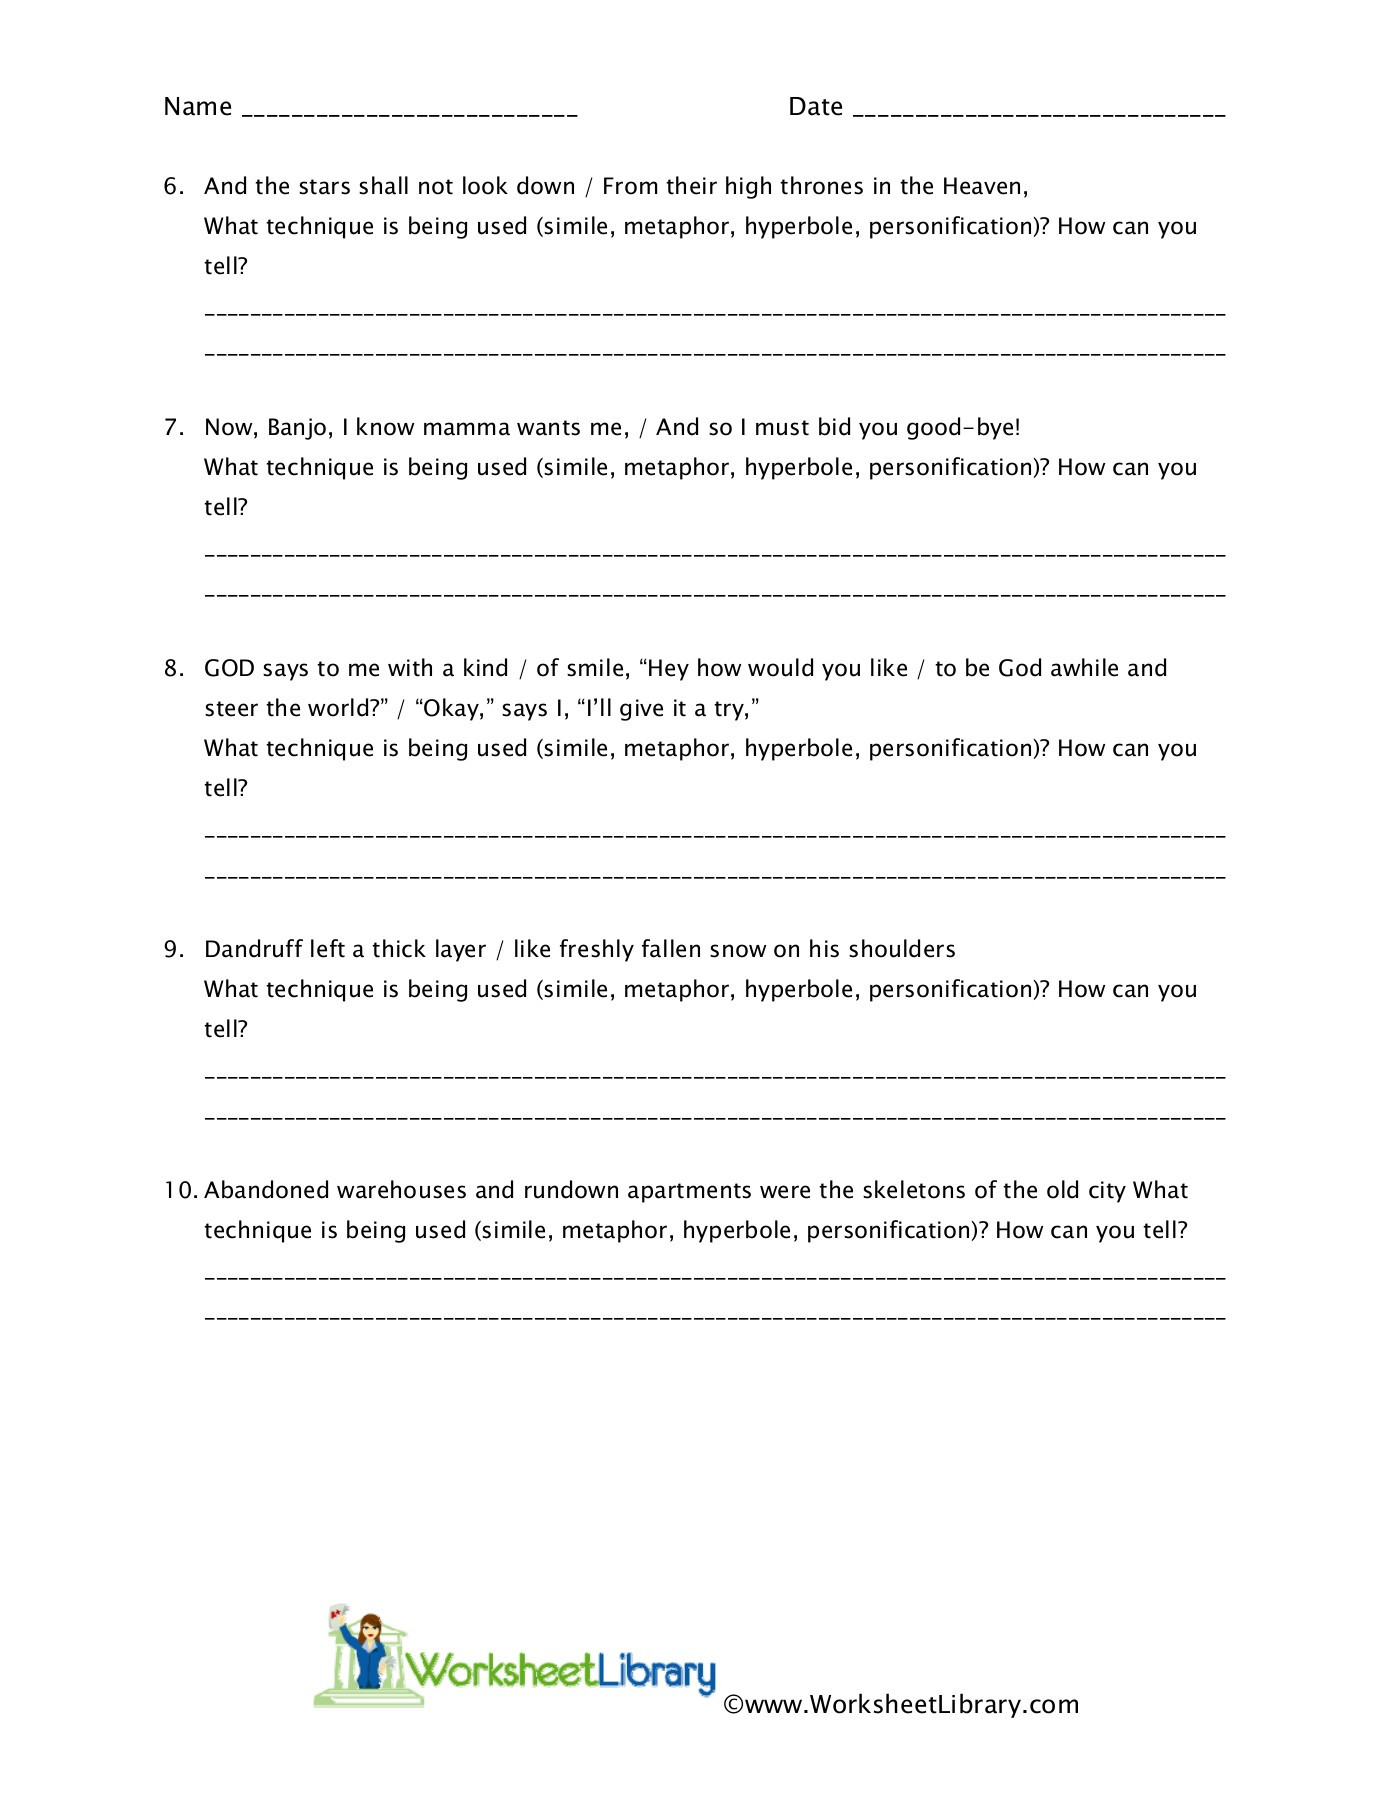 Simile Metaphor Personification Worksheet Identifying Figurative Language – Worksheet 1 Pages 1 3